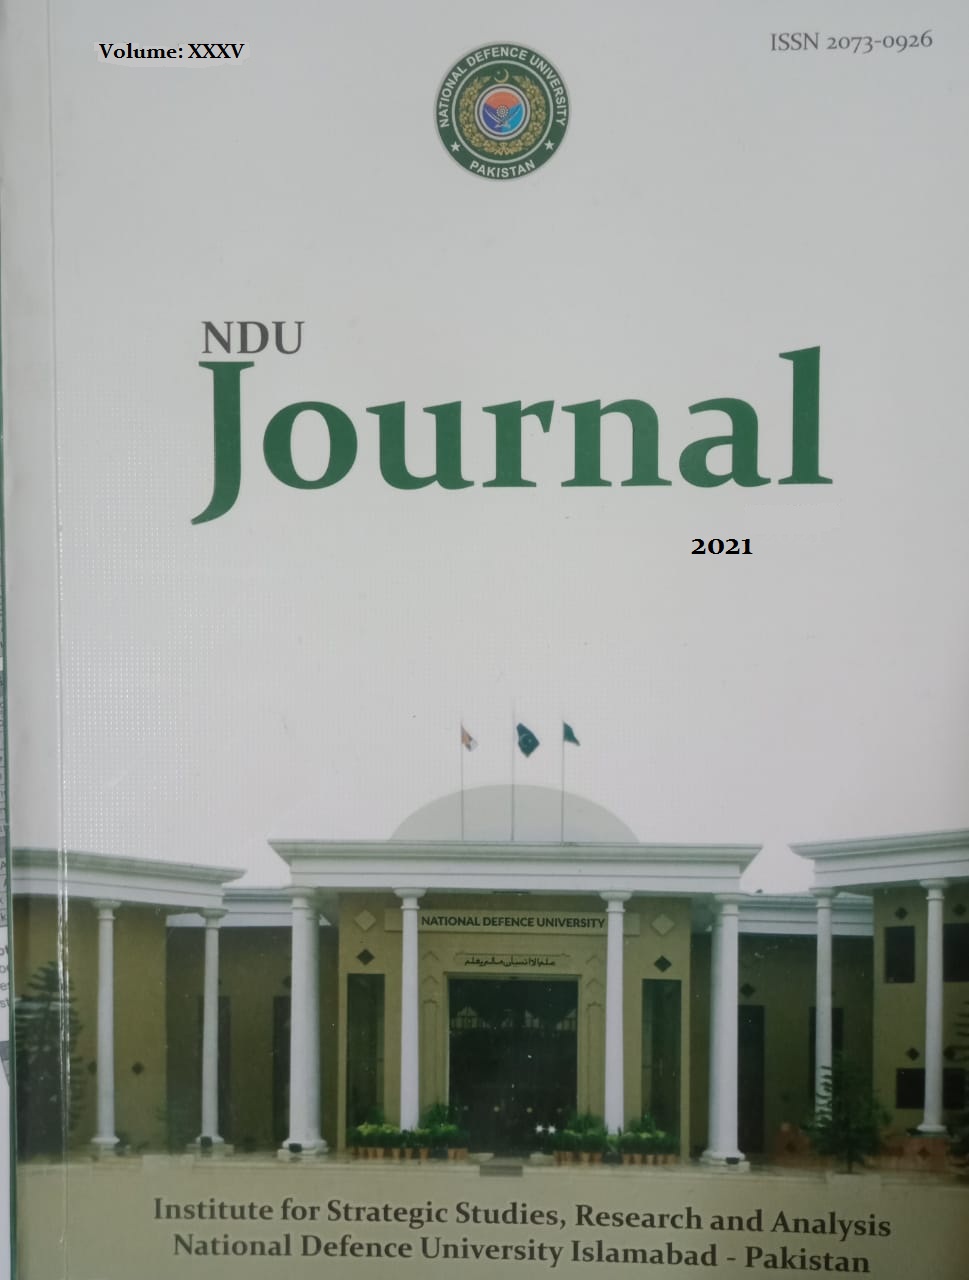 					View Vol. 35 (2021): NDU Journal
				